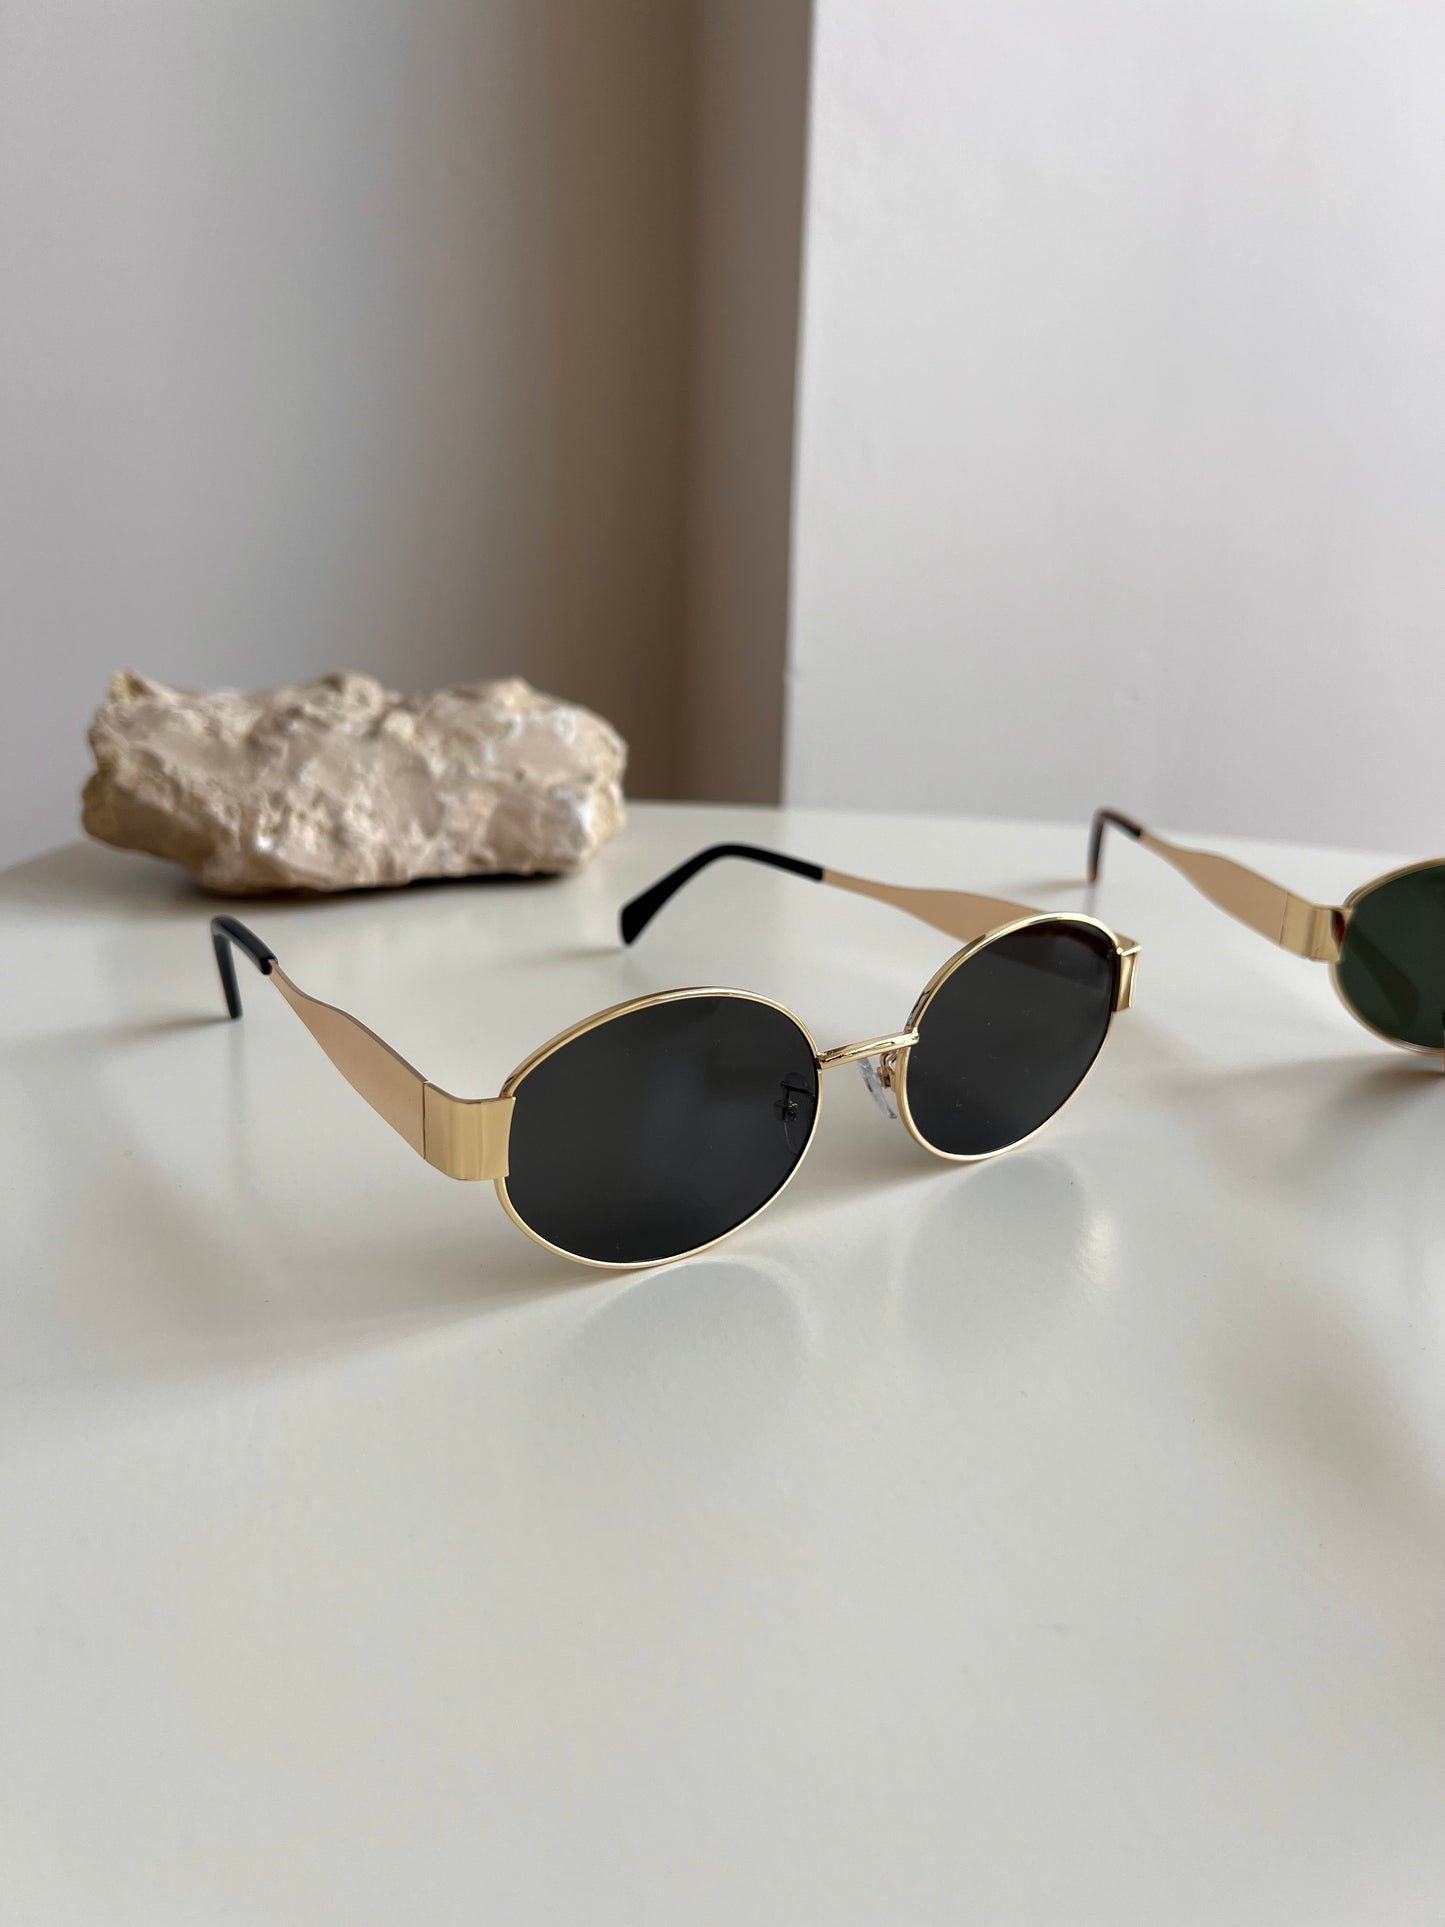 Golden oval sunglasses